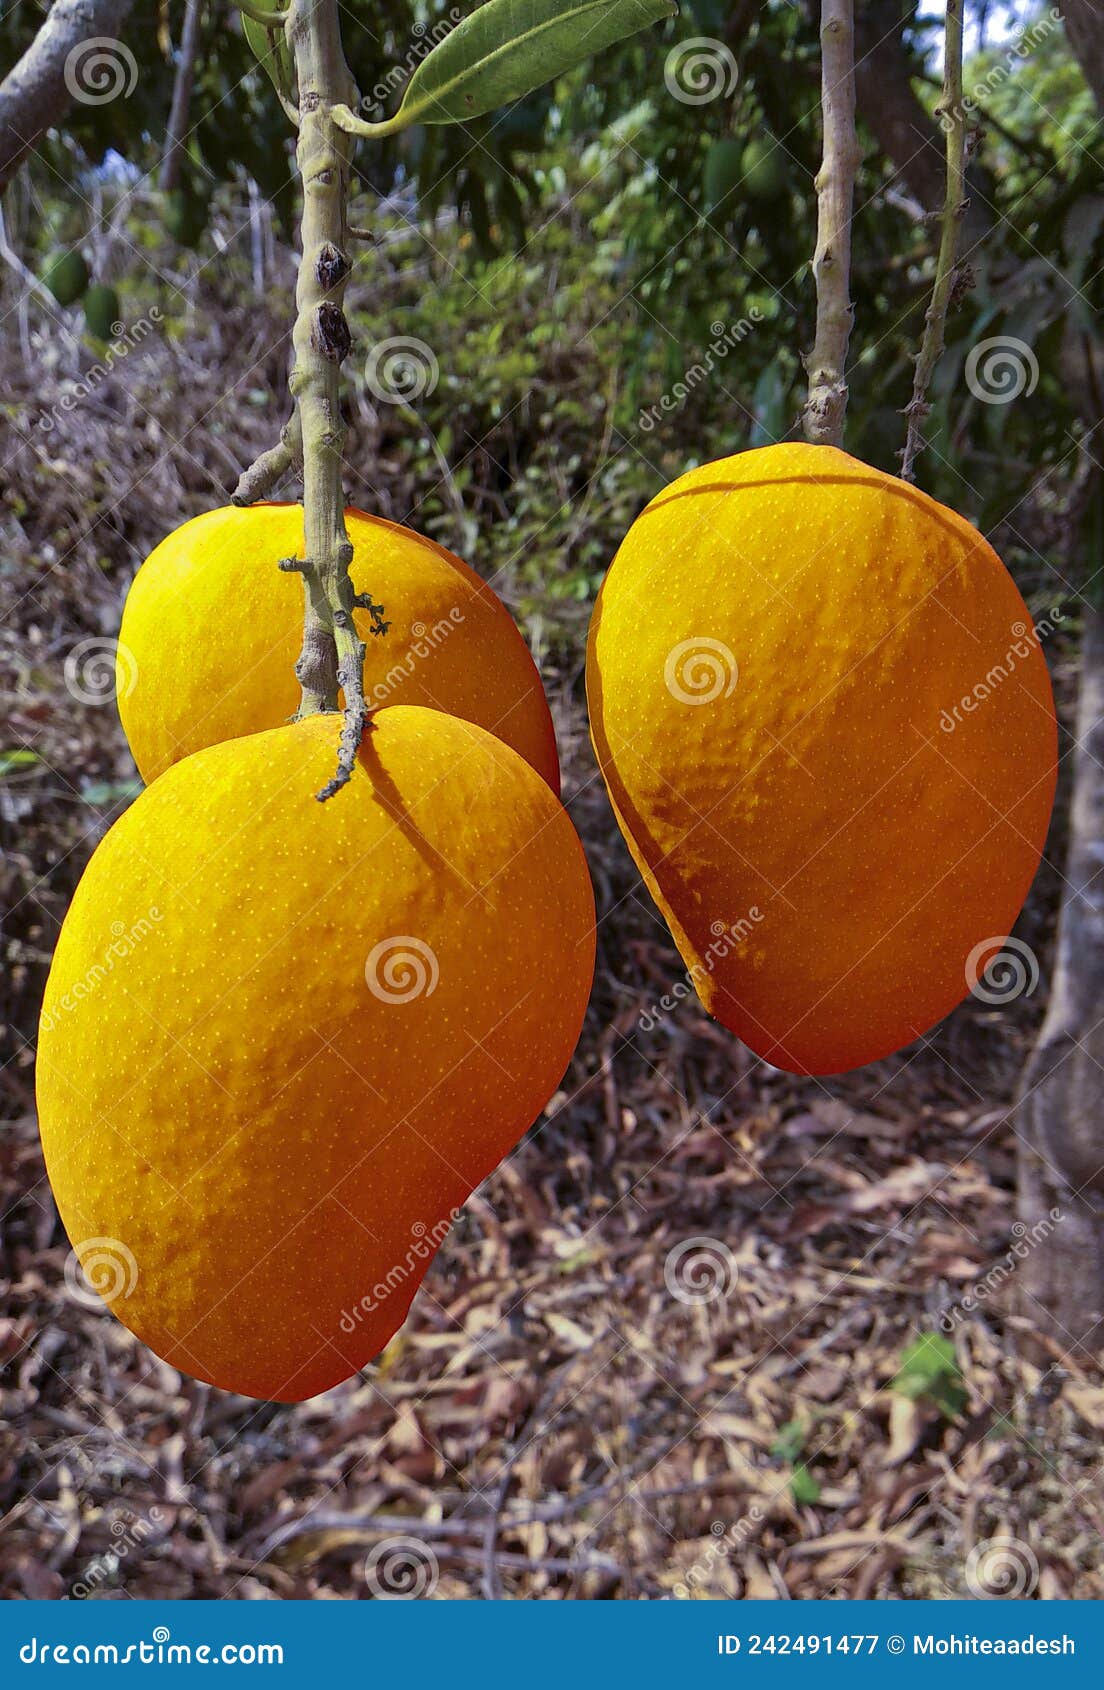 hapus mango hanging on branch of tree. maharashtra-india.